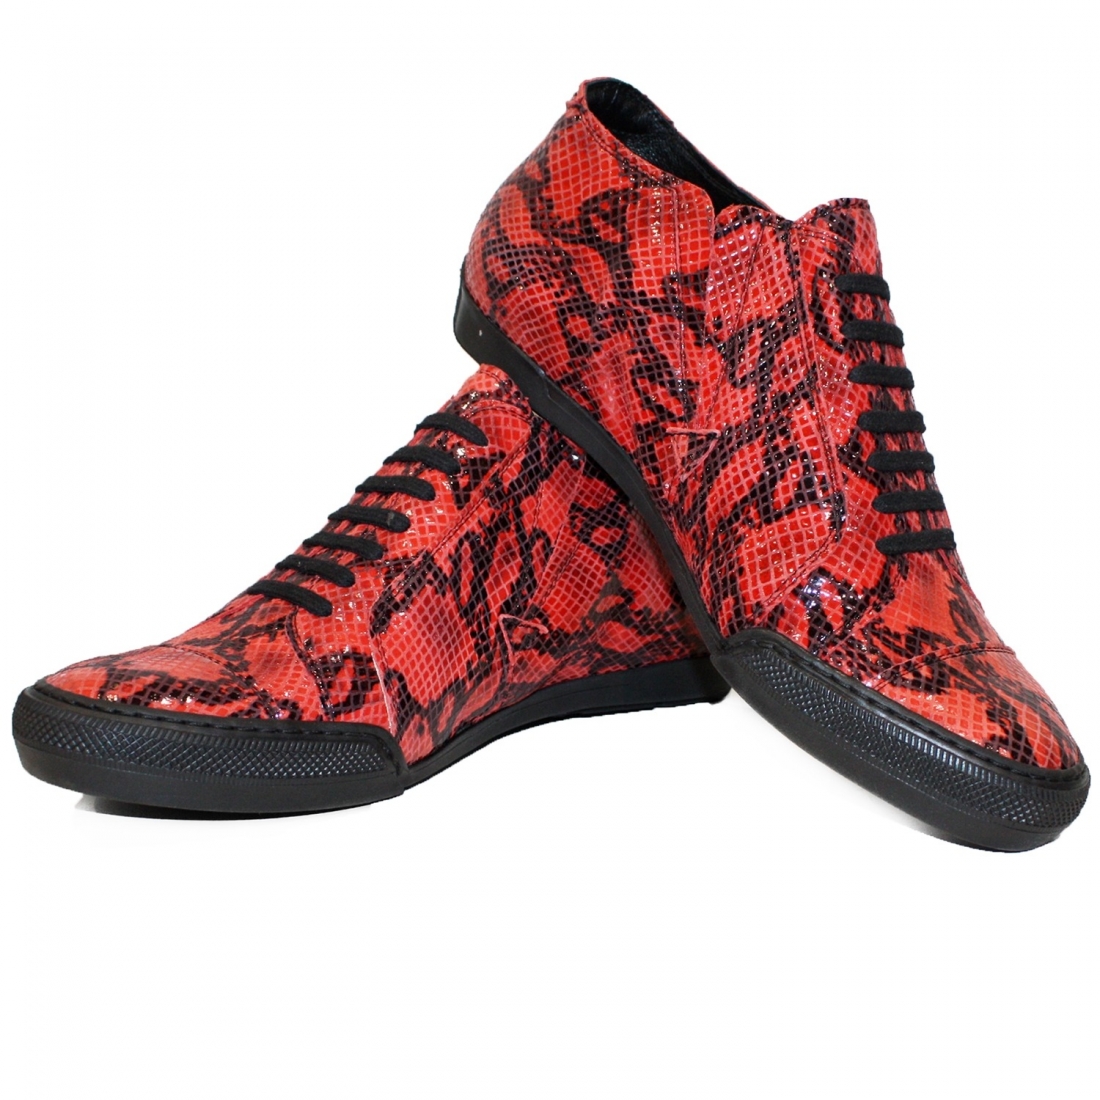 Modello Luherro - Casual Shoes - Handmade Colorful Italian Leather Shoes